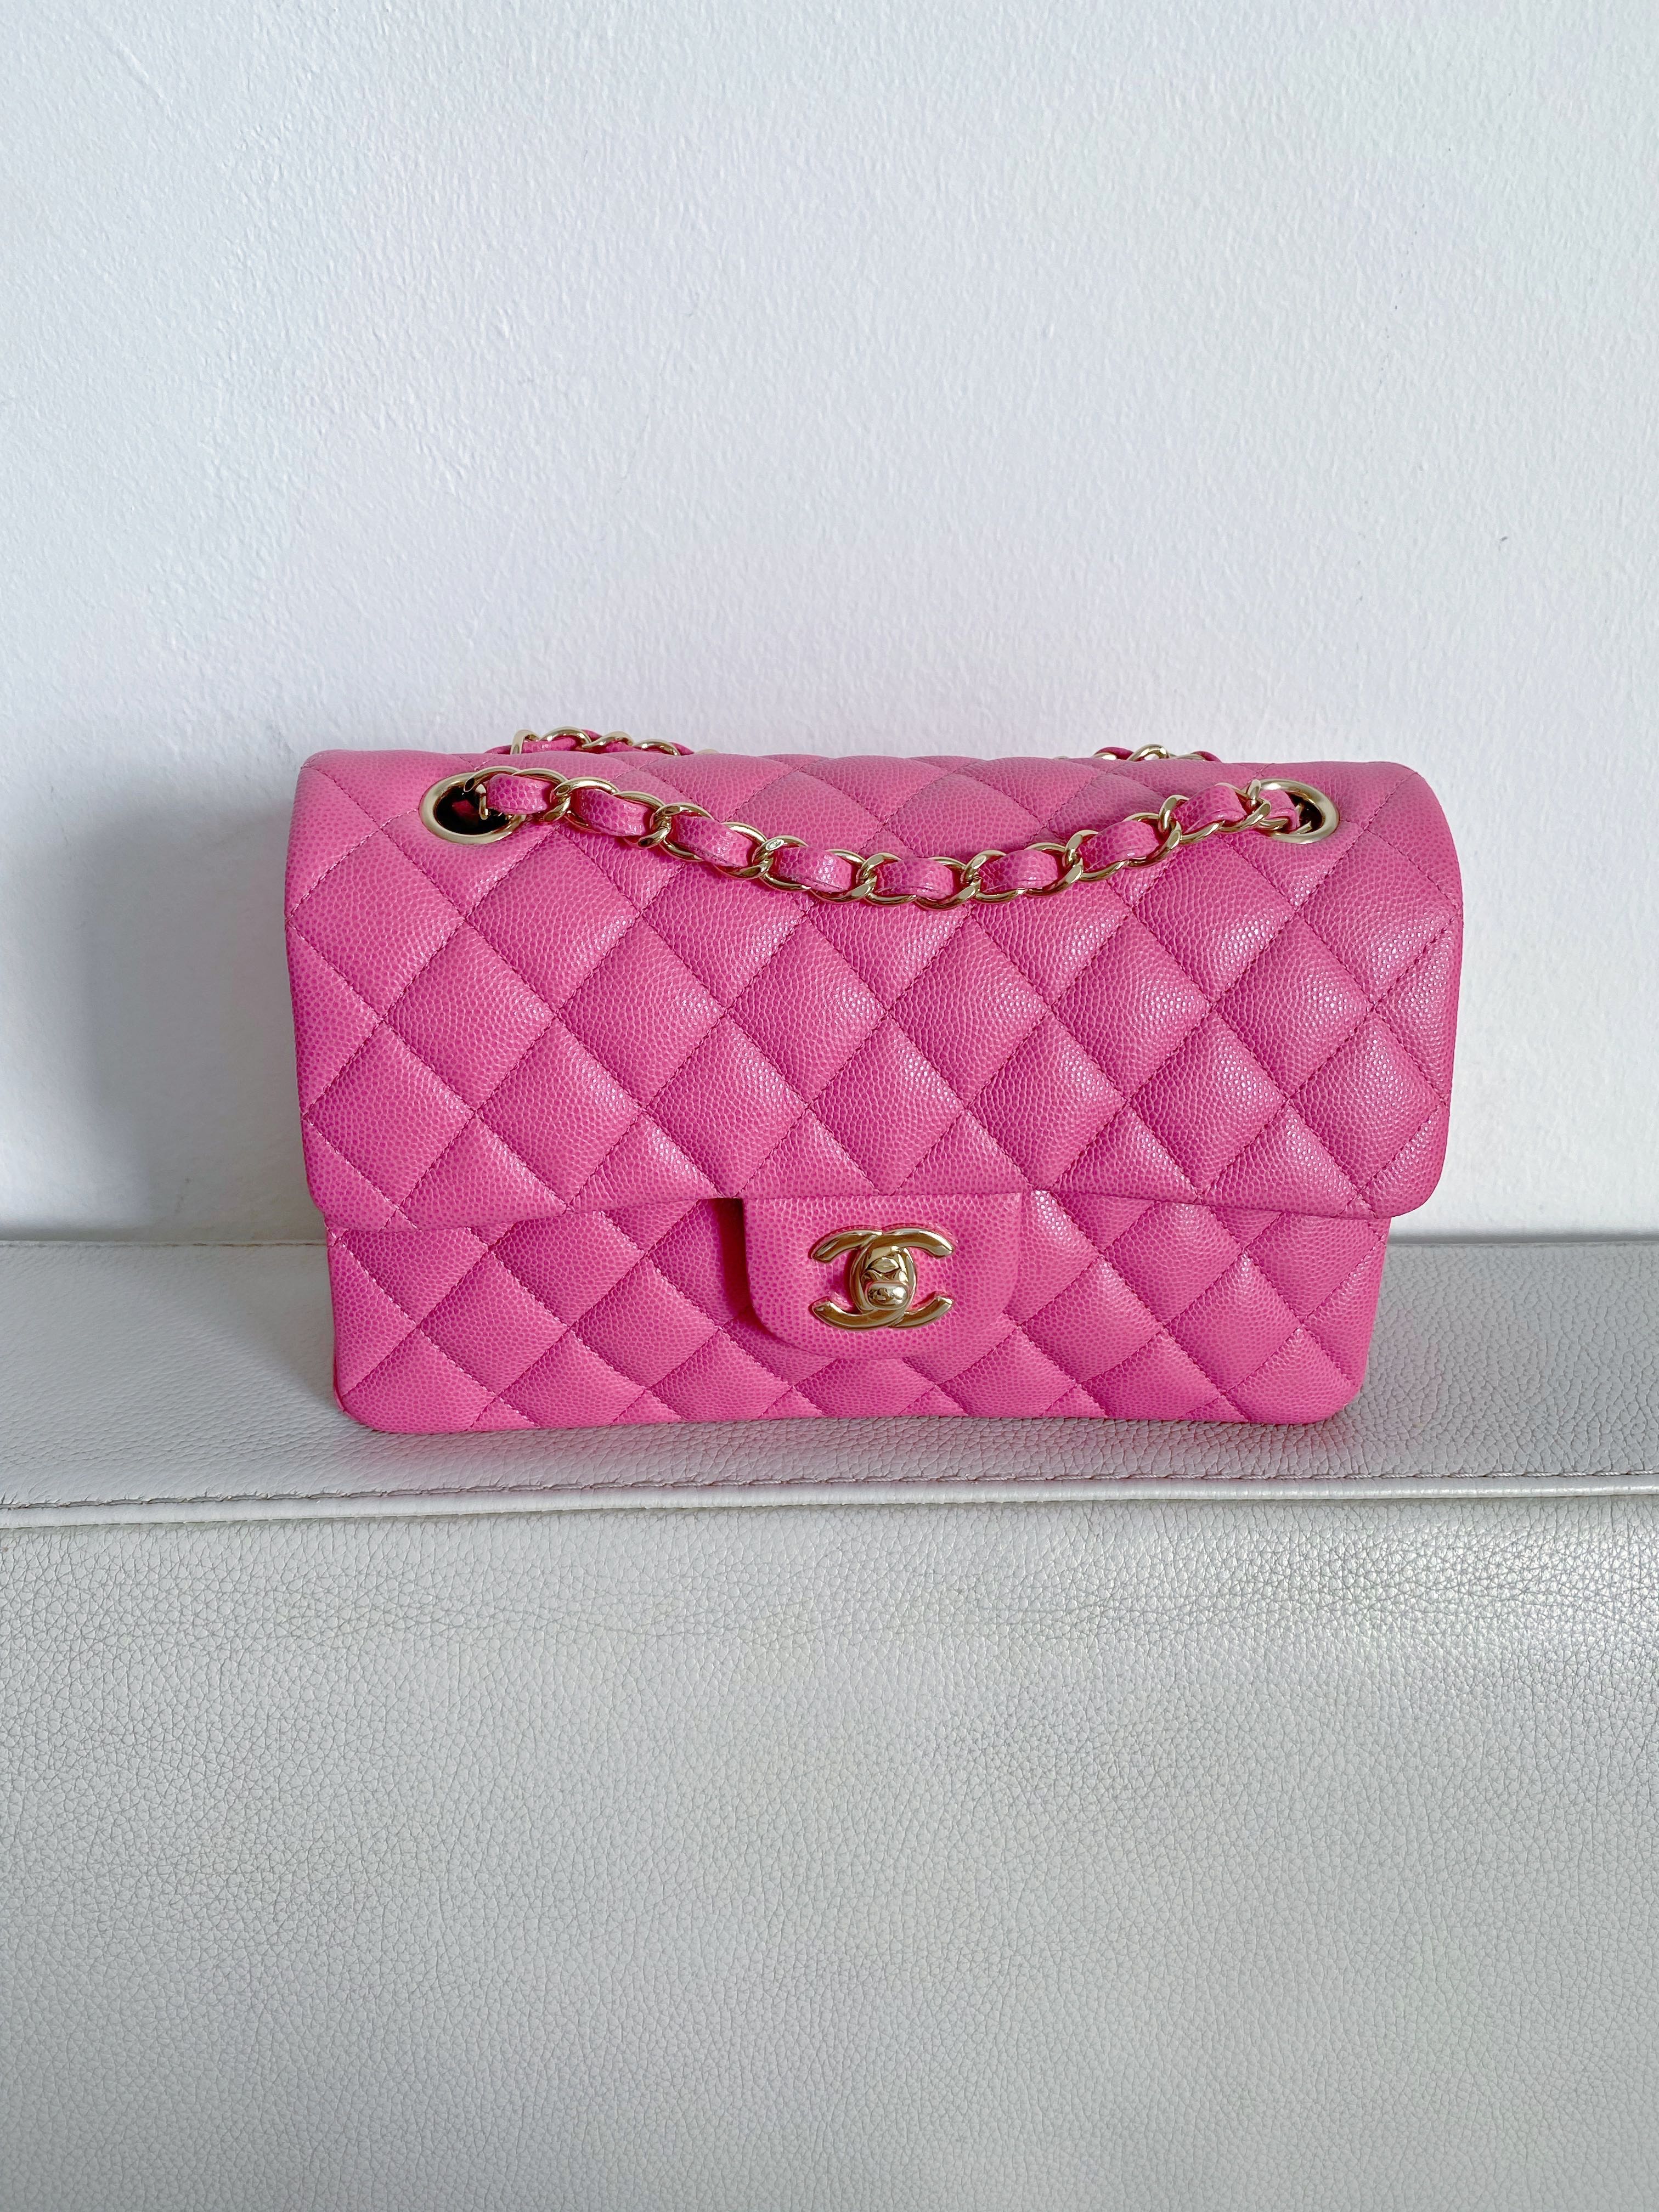 Chanel bubble gum pink caviar small classic flap bag LGHW, Women's